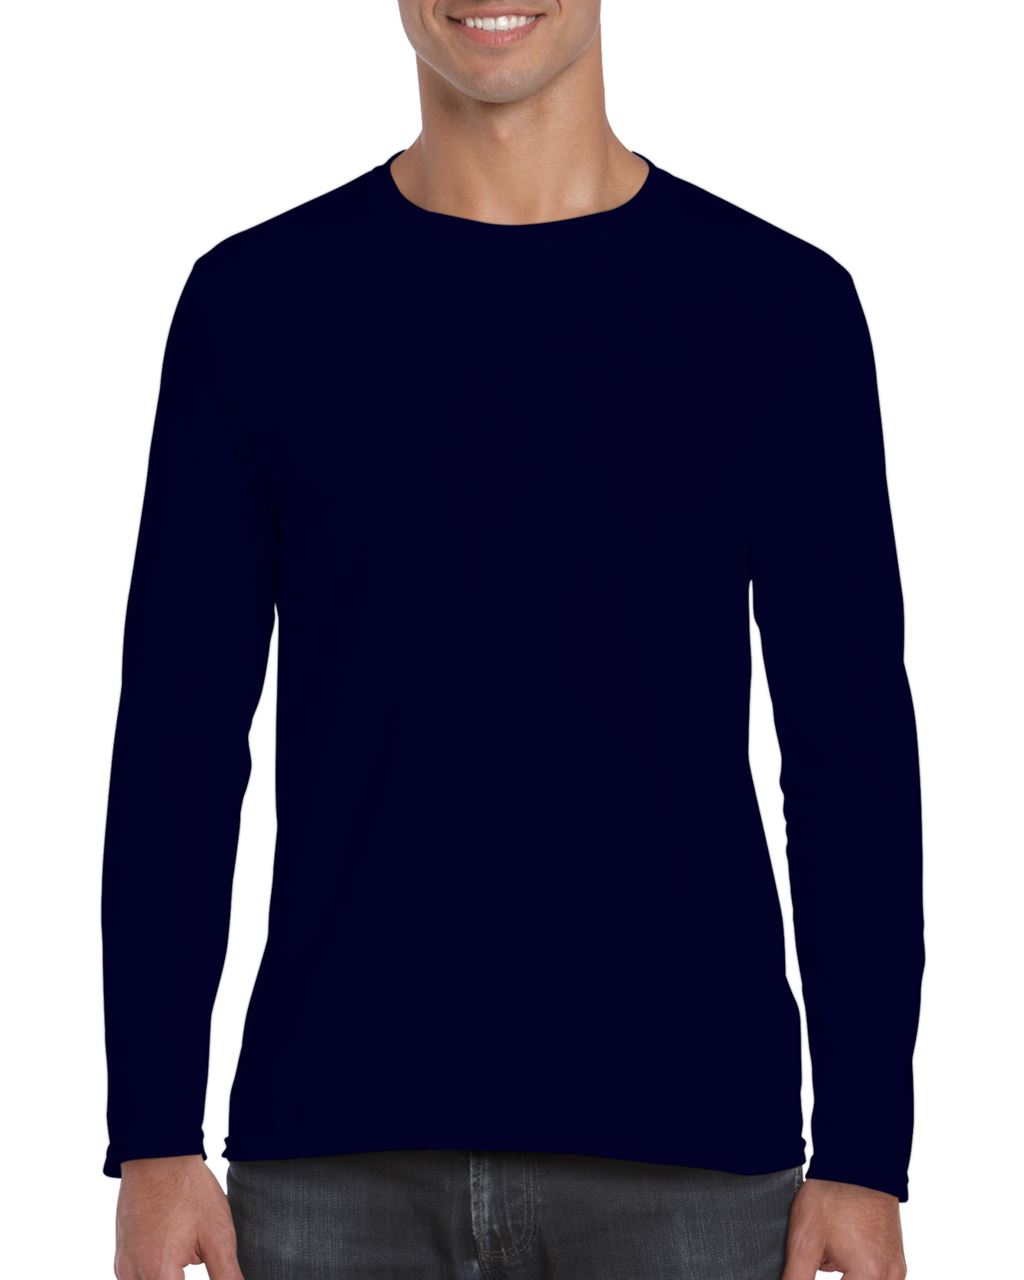 Gildan Softstyle® Adult Long Sleeve T-shirt - blue